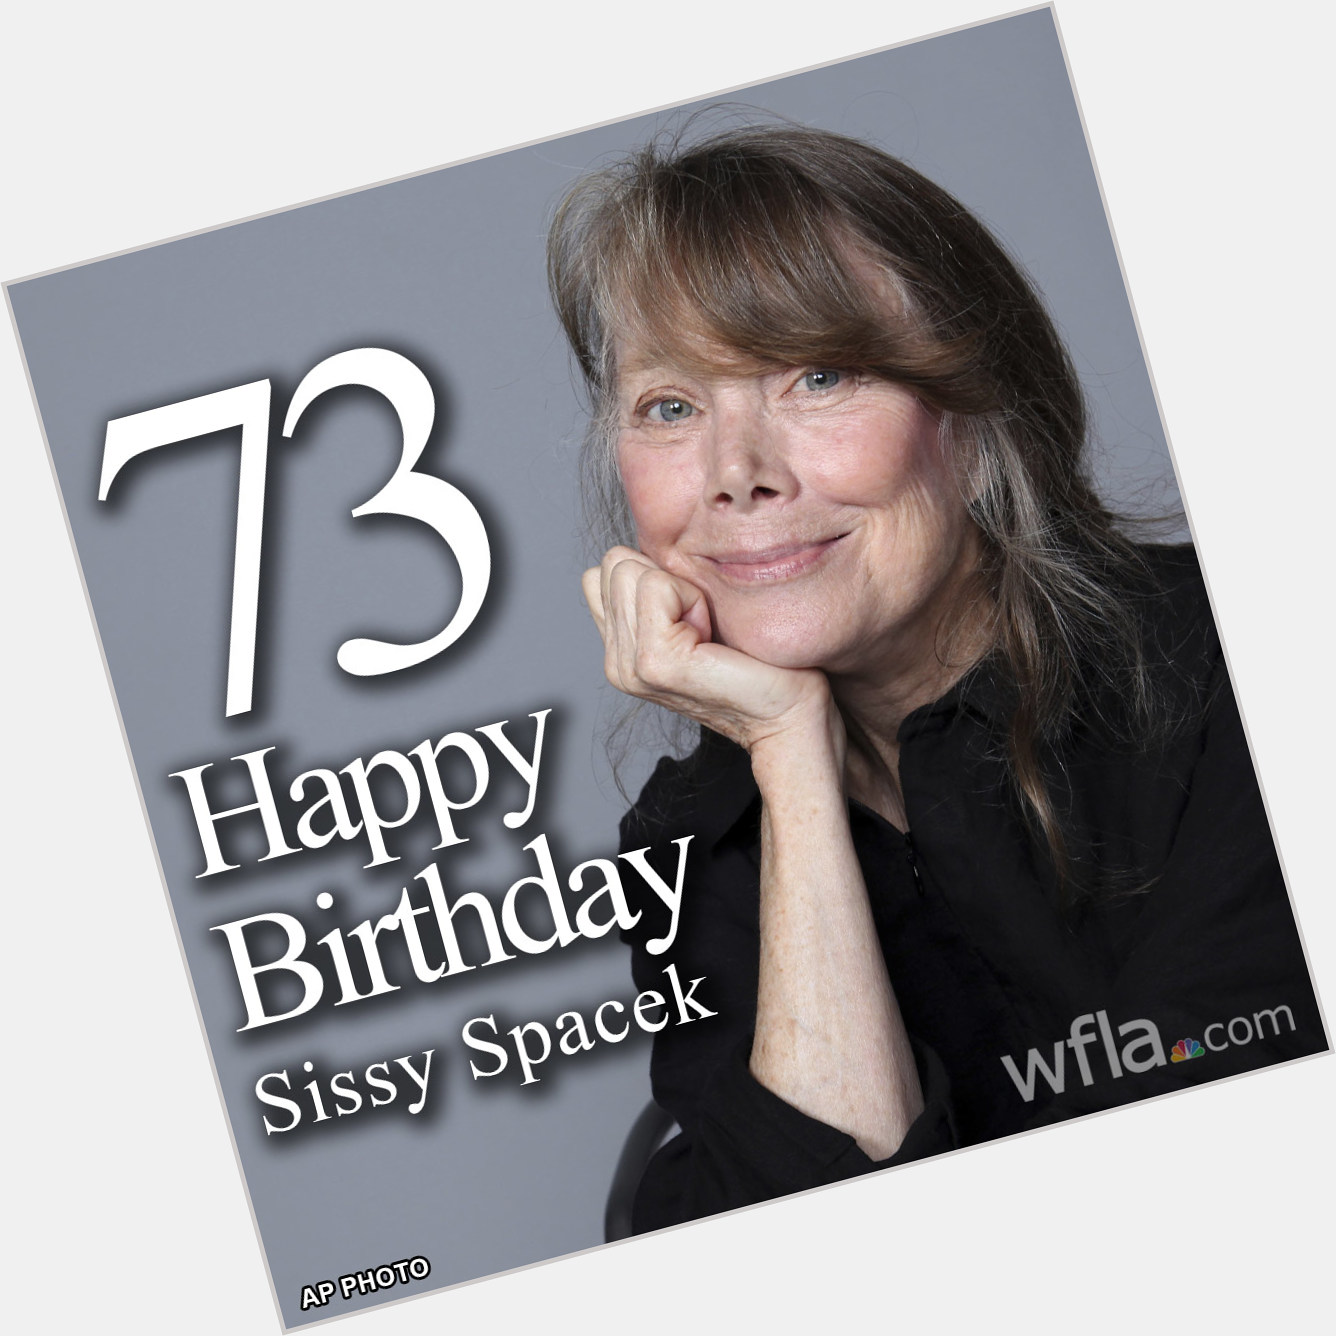 HAPPY BIRTHDAY, SISSY SPACEK The Academy Award-winning actress turns 73 today!  